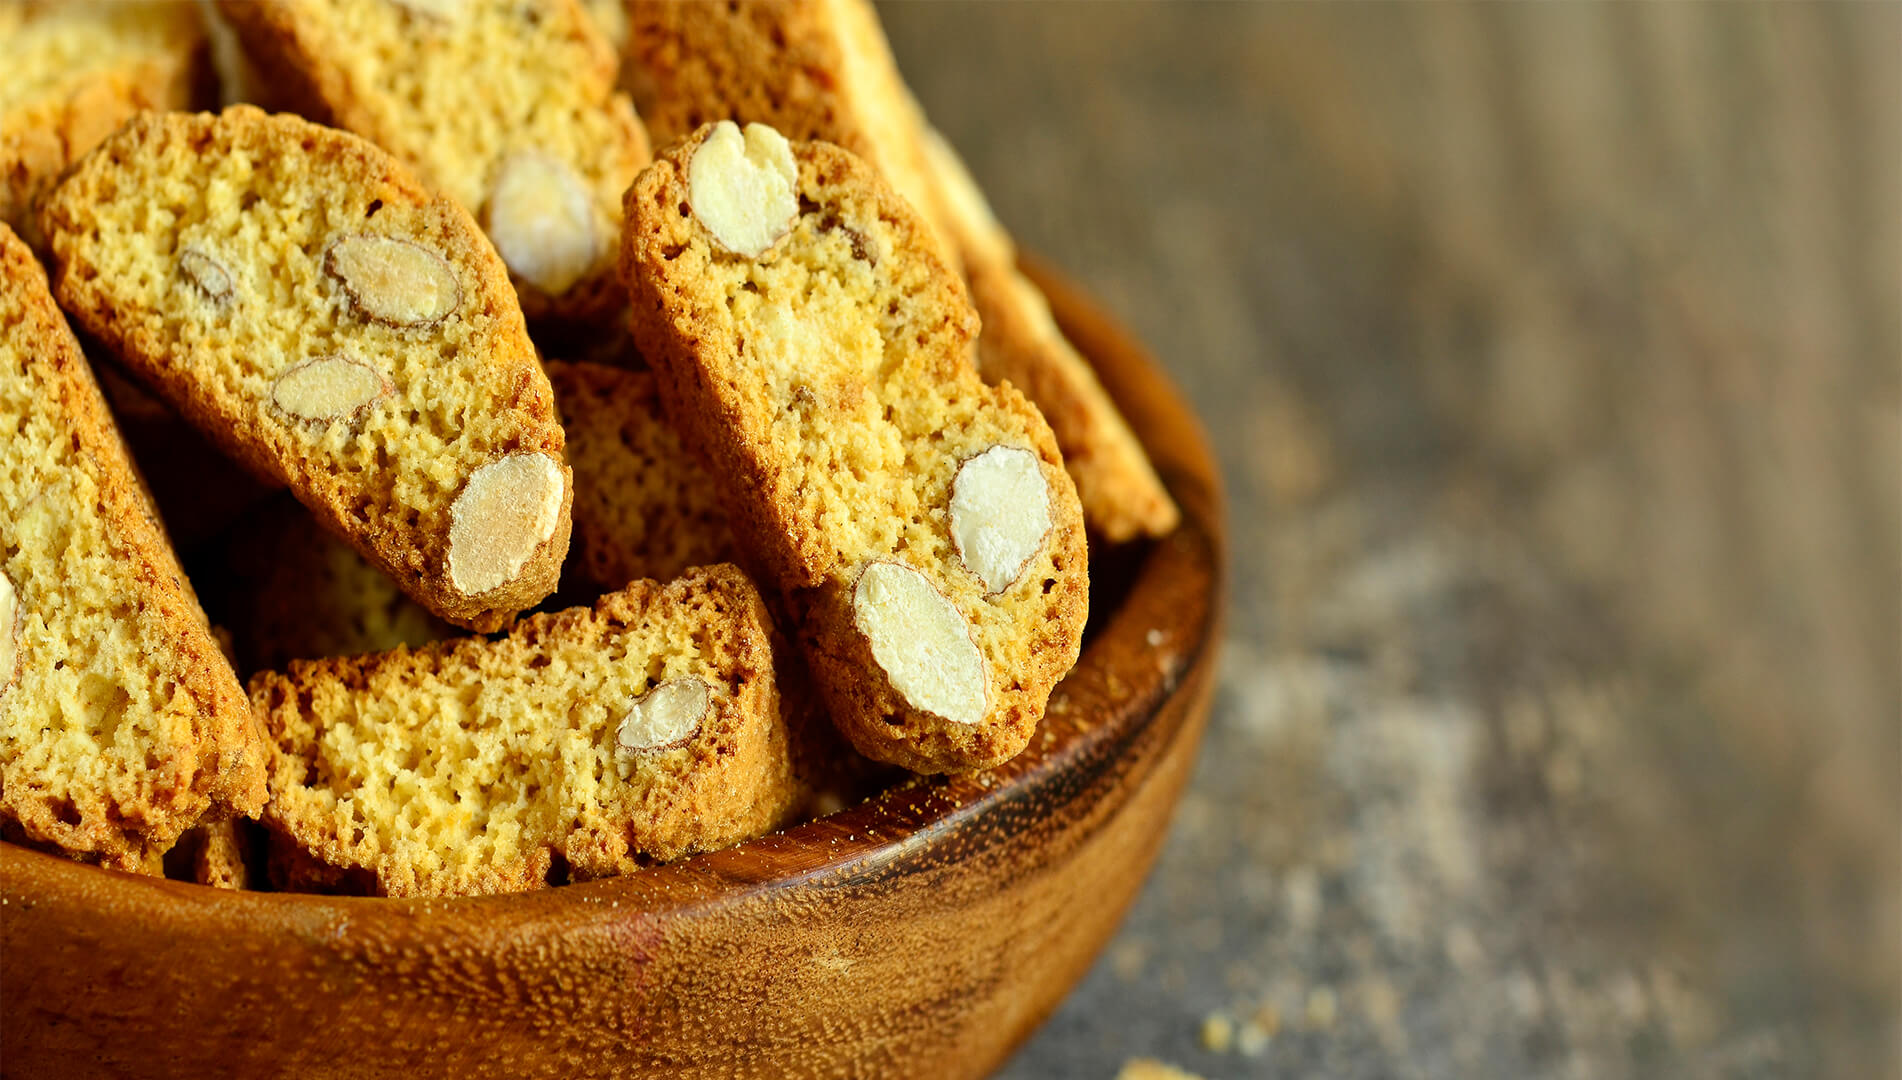 This gluten-free cracker recipe features gruyere and hazelnut flour